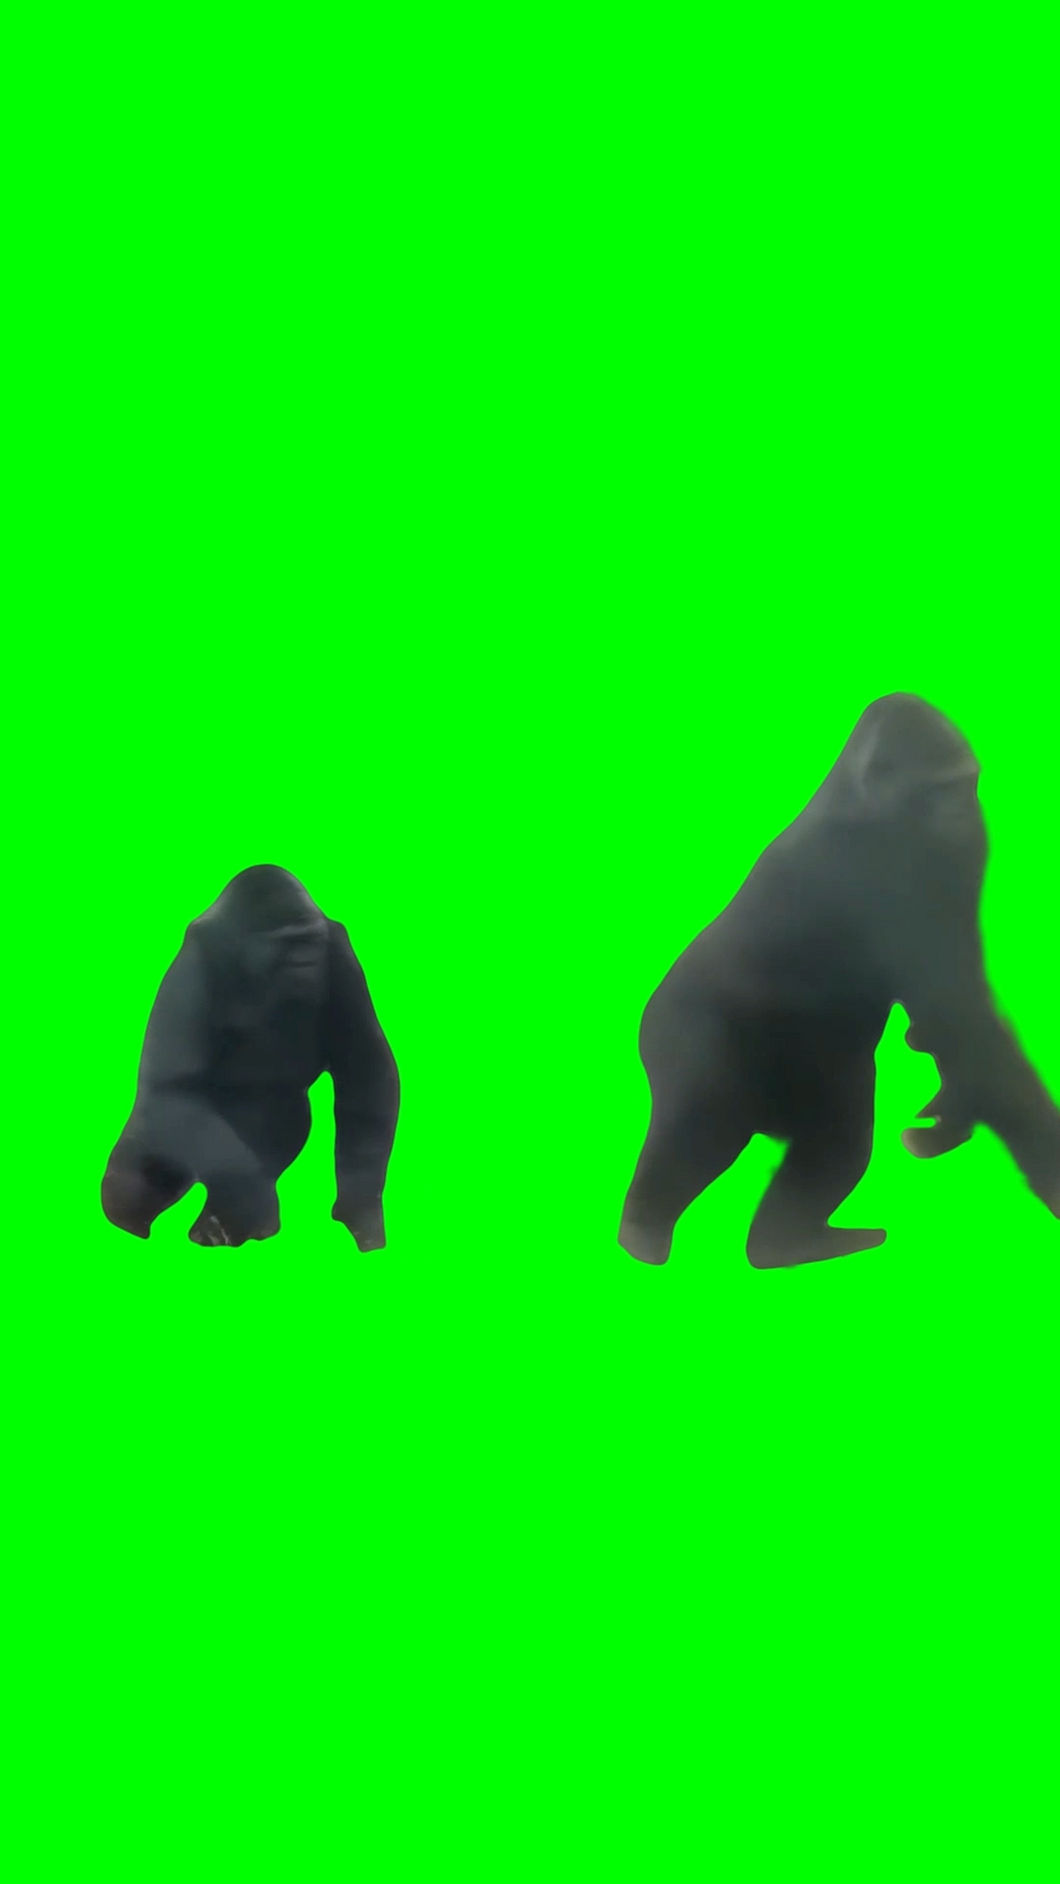 3 gorillas walking and sneaking out meme (Green Screen)